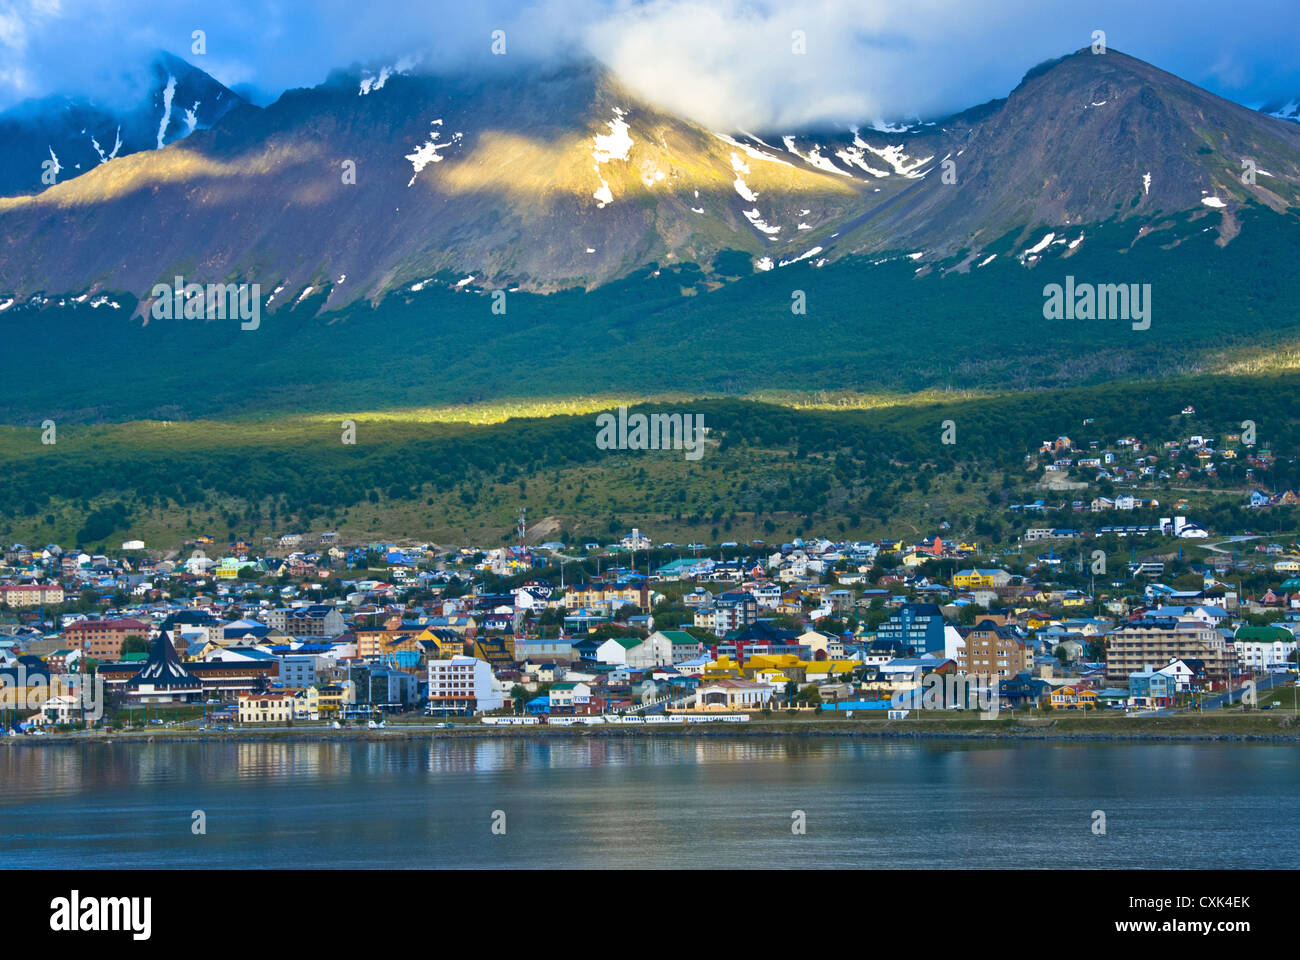 Port of Ushuaia, the capital of the Provincia de Tierra del Fuego, Argentina, South America Stock Photo